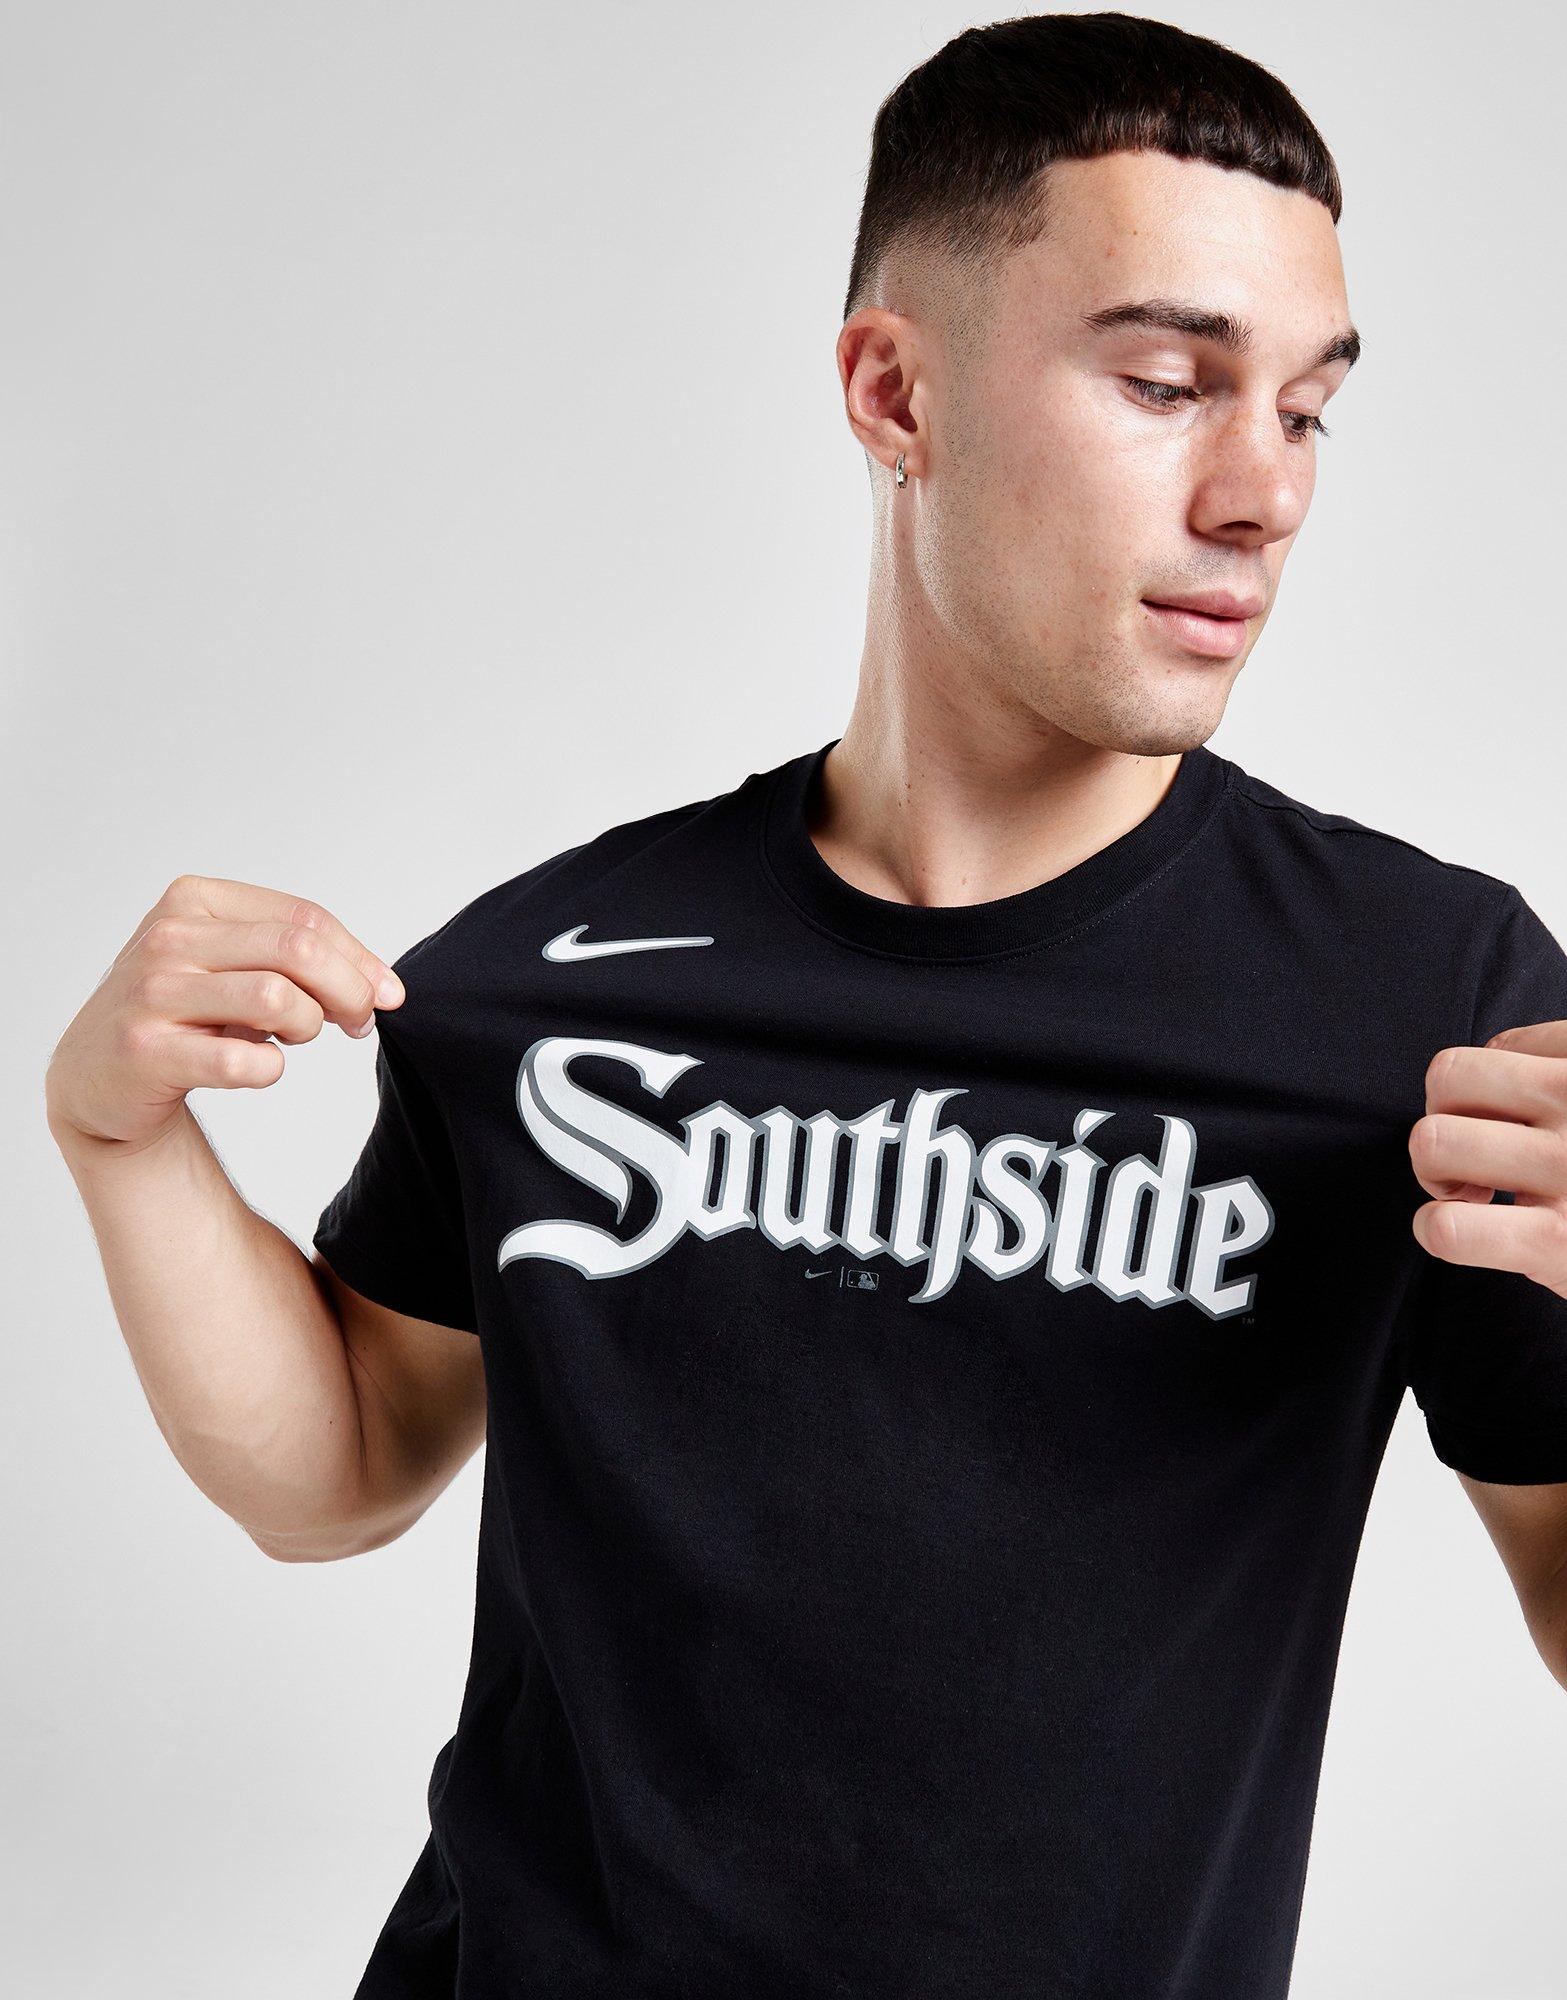 nike southside shirt